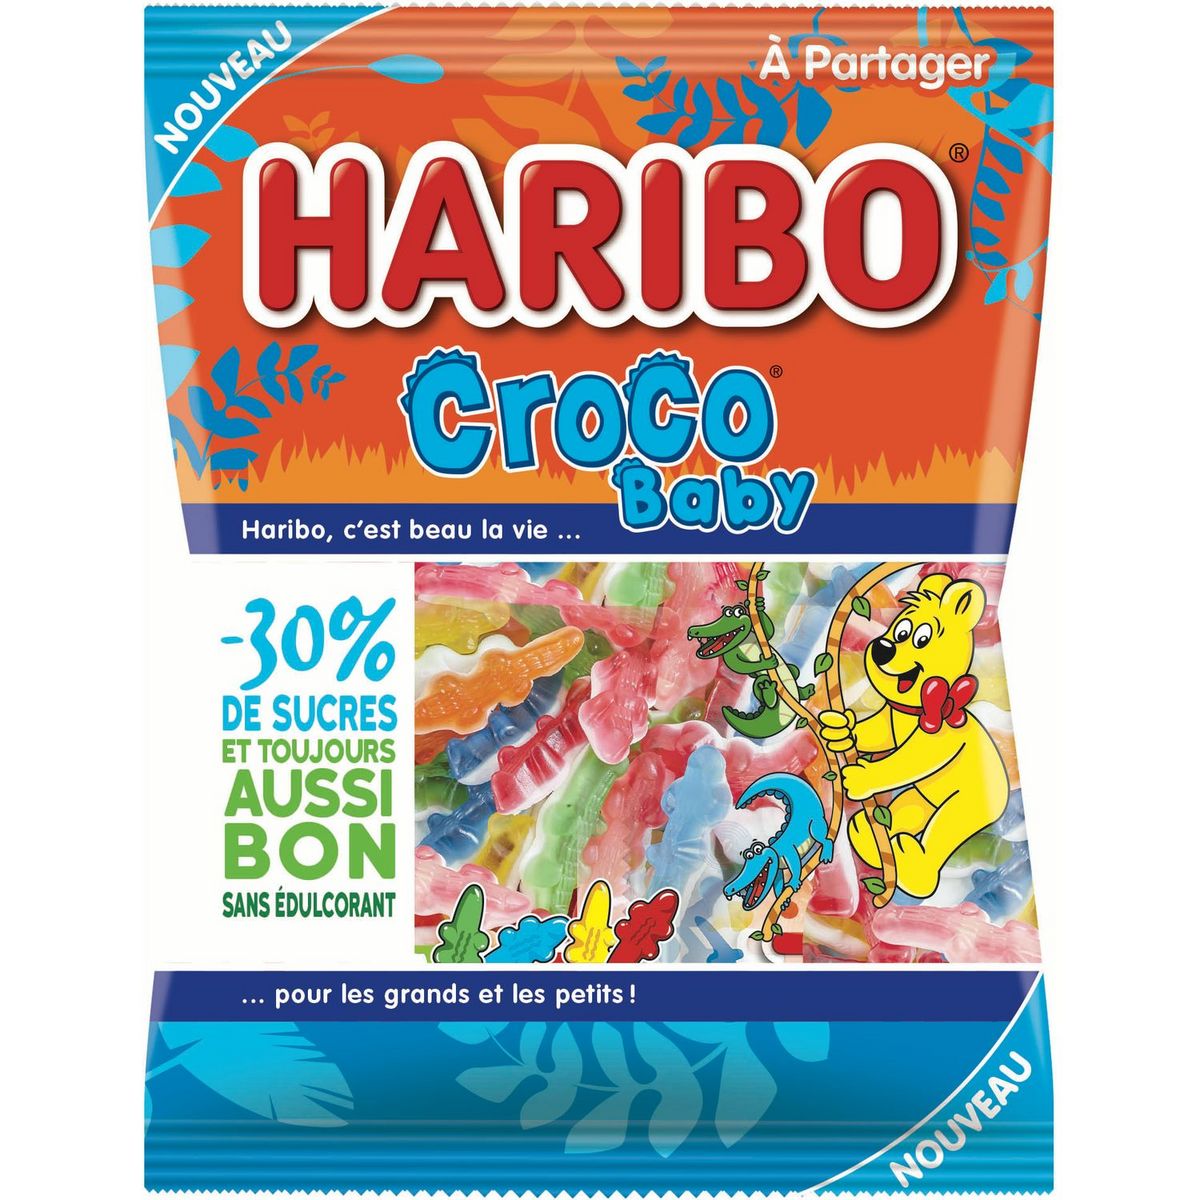 Bonbon Haribo Crocodile